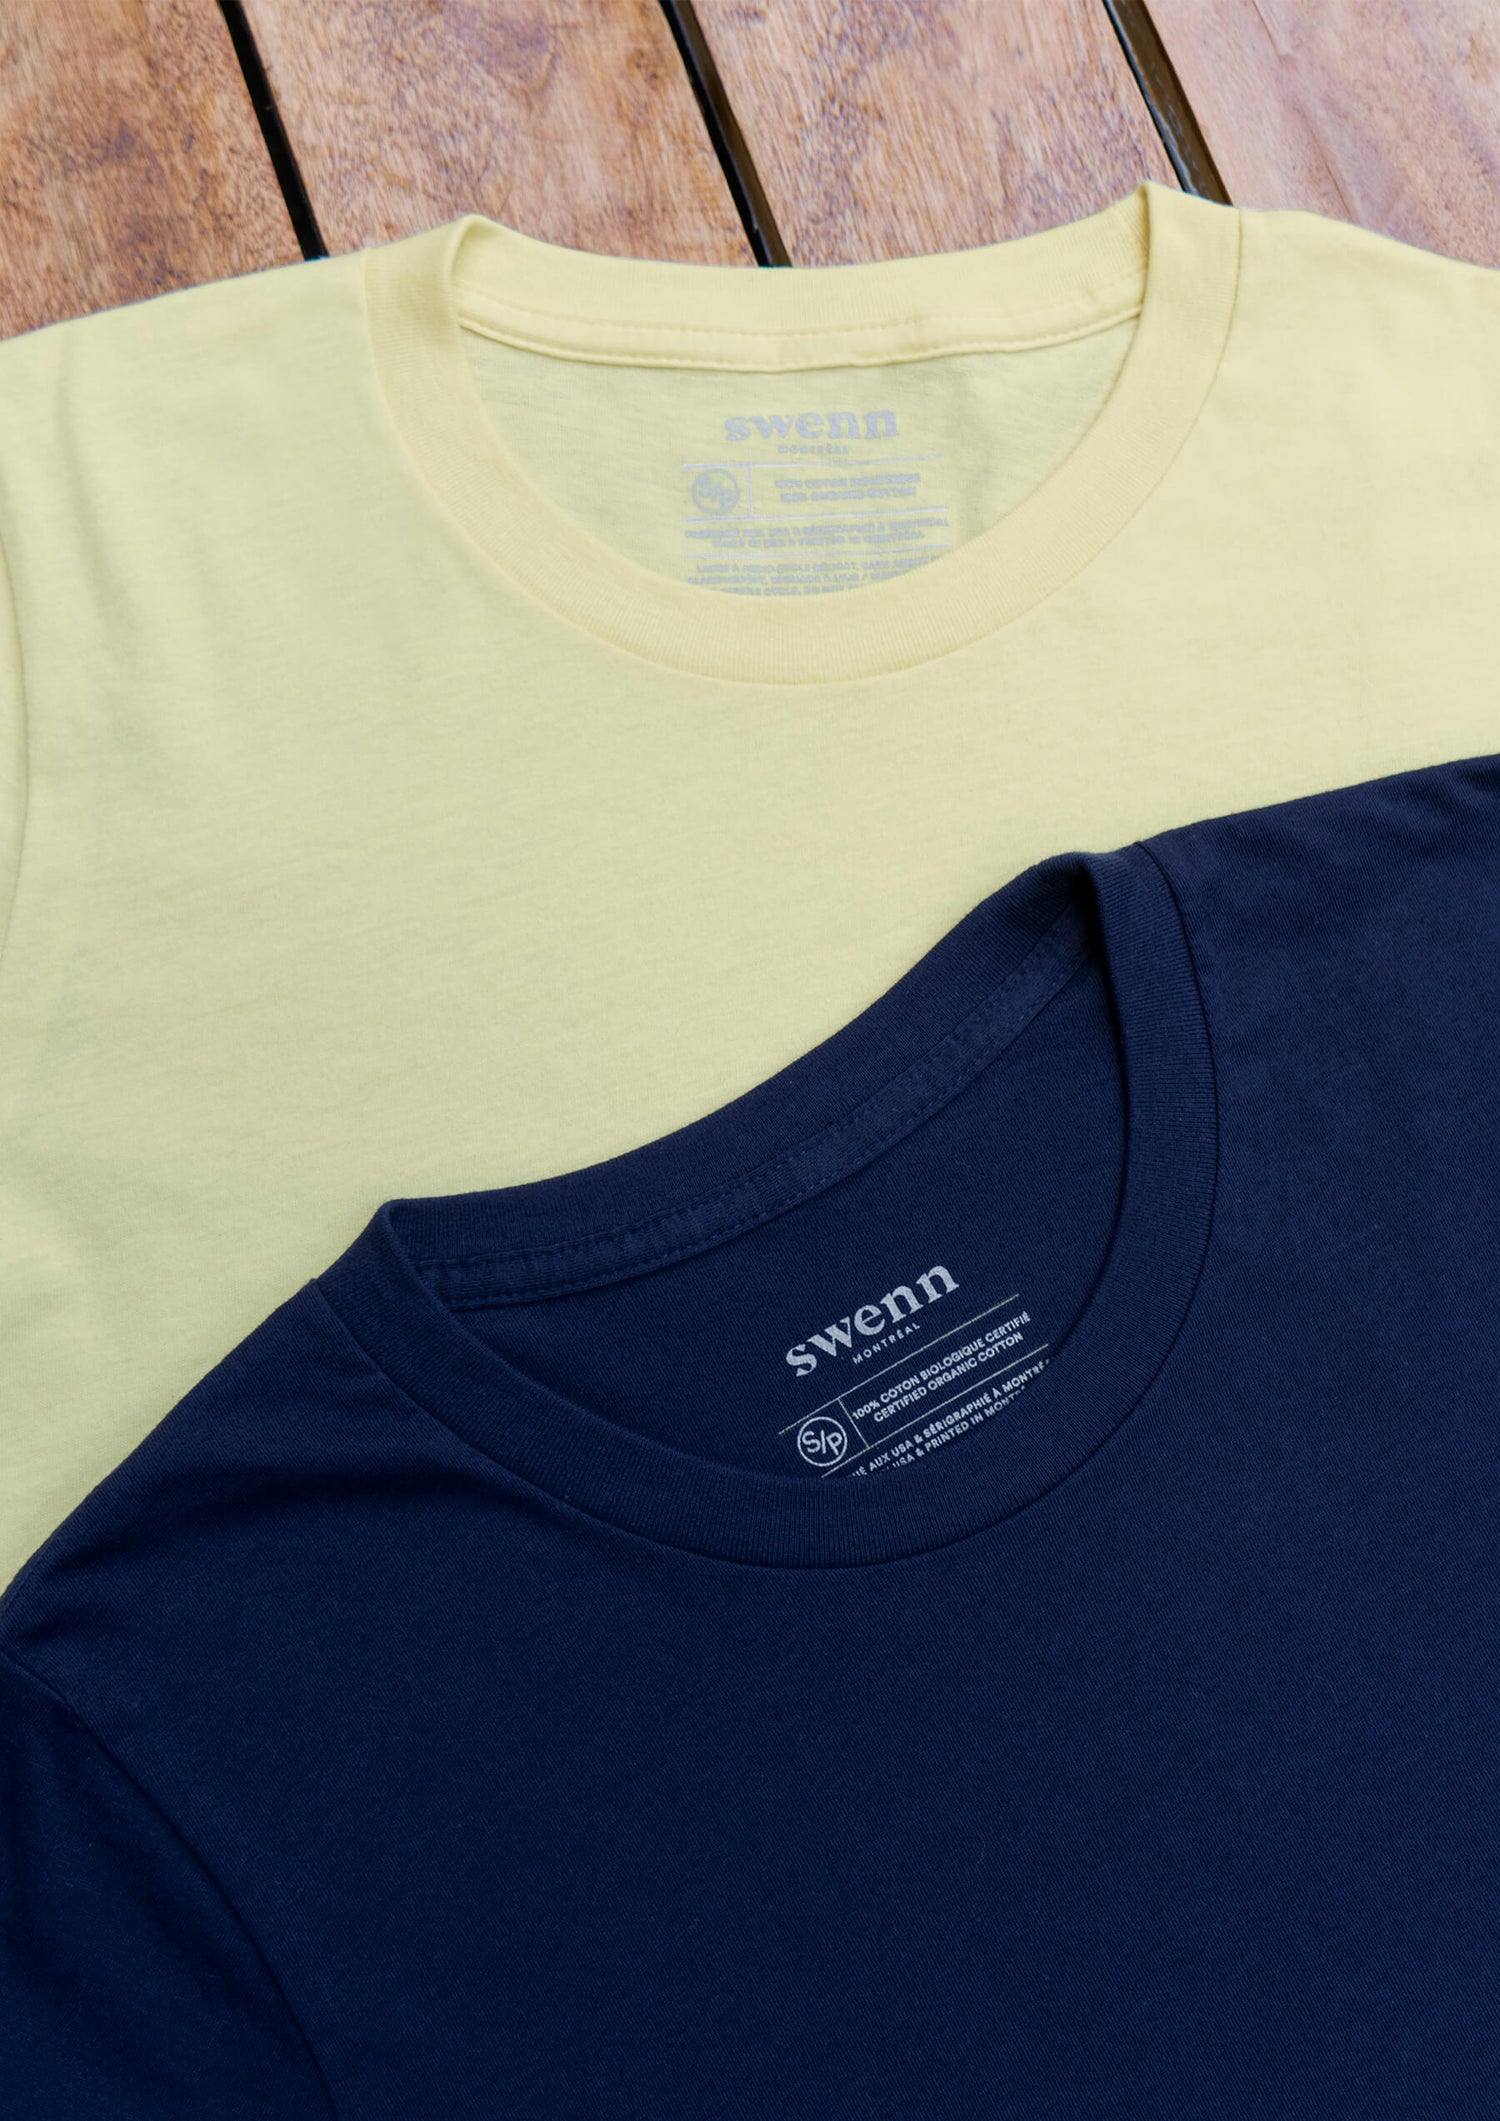 SWENN - Photos - 2 t-shirts bleu marine - jaune pâle